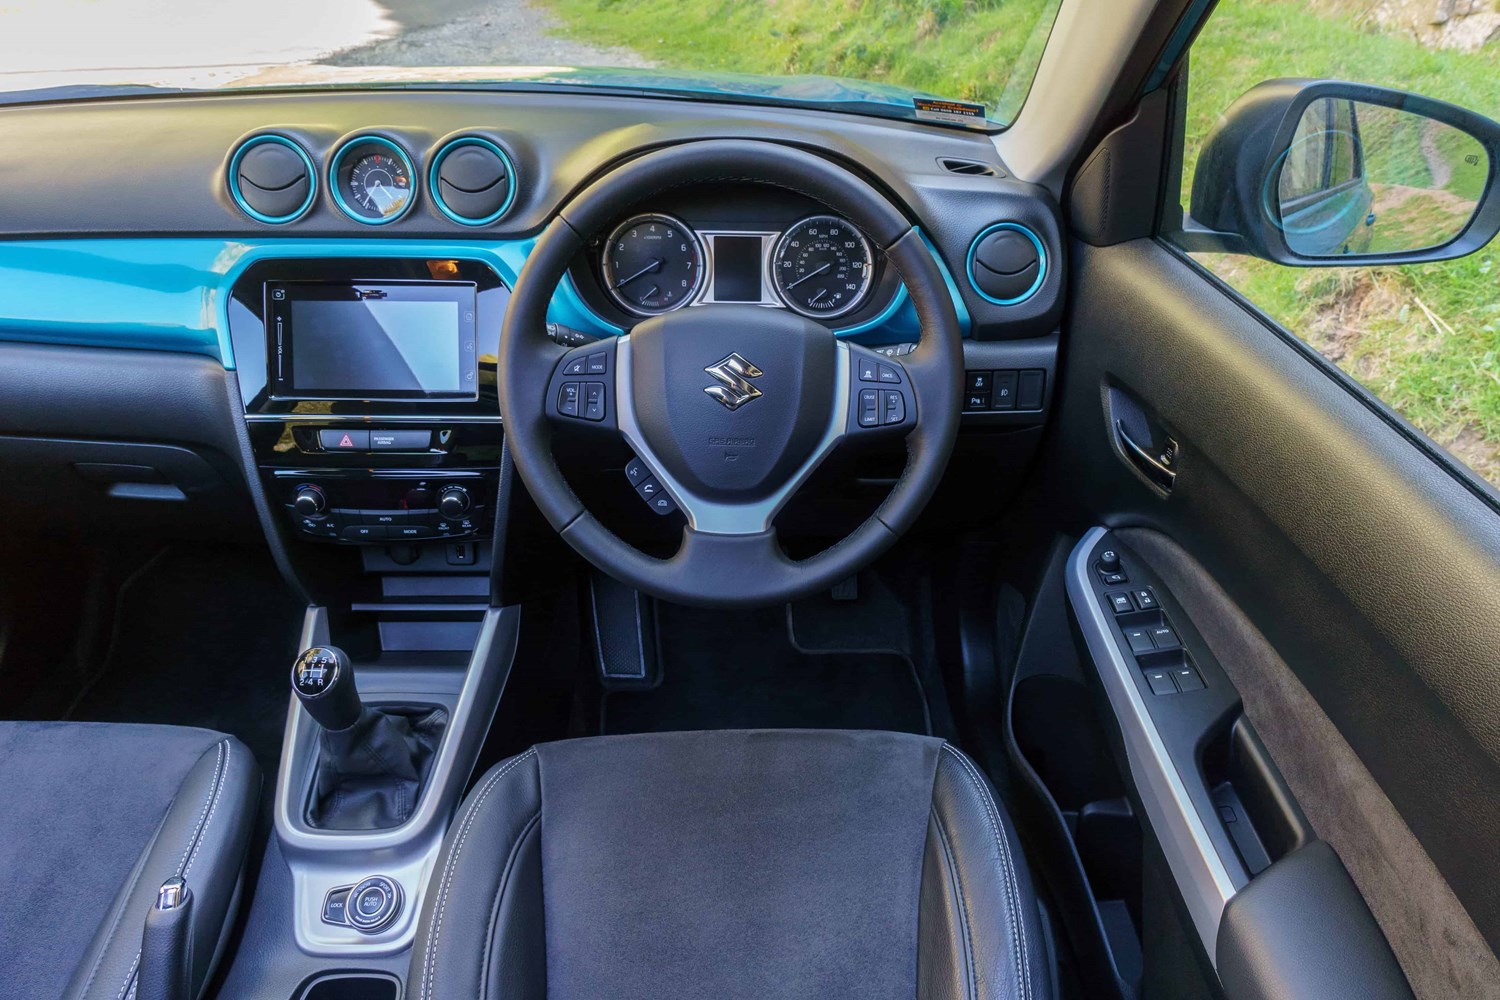 Suzuki Vitara 2019 Range Review | Price, Overview